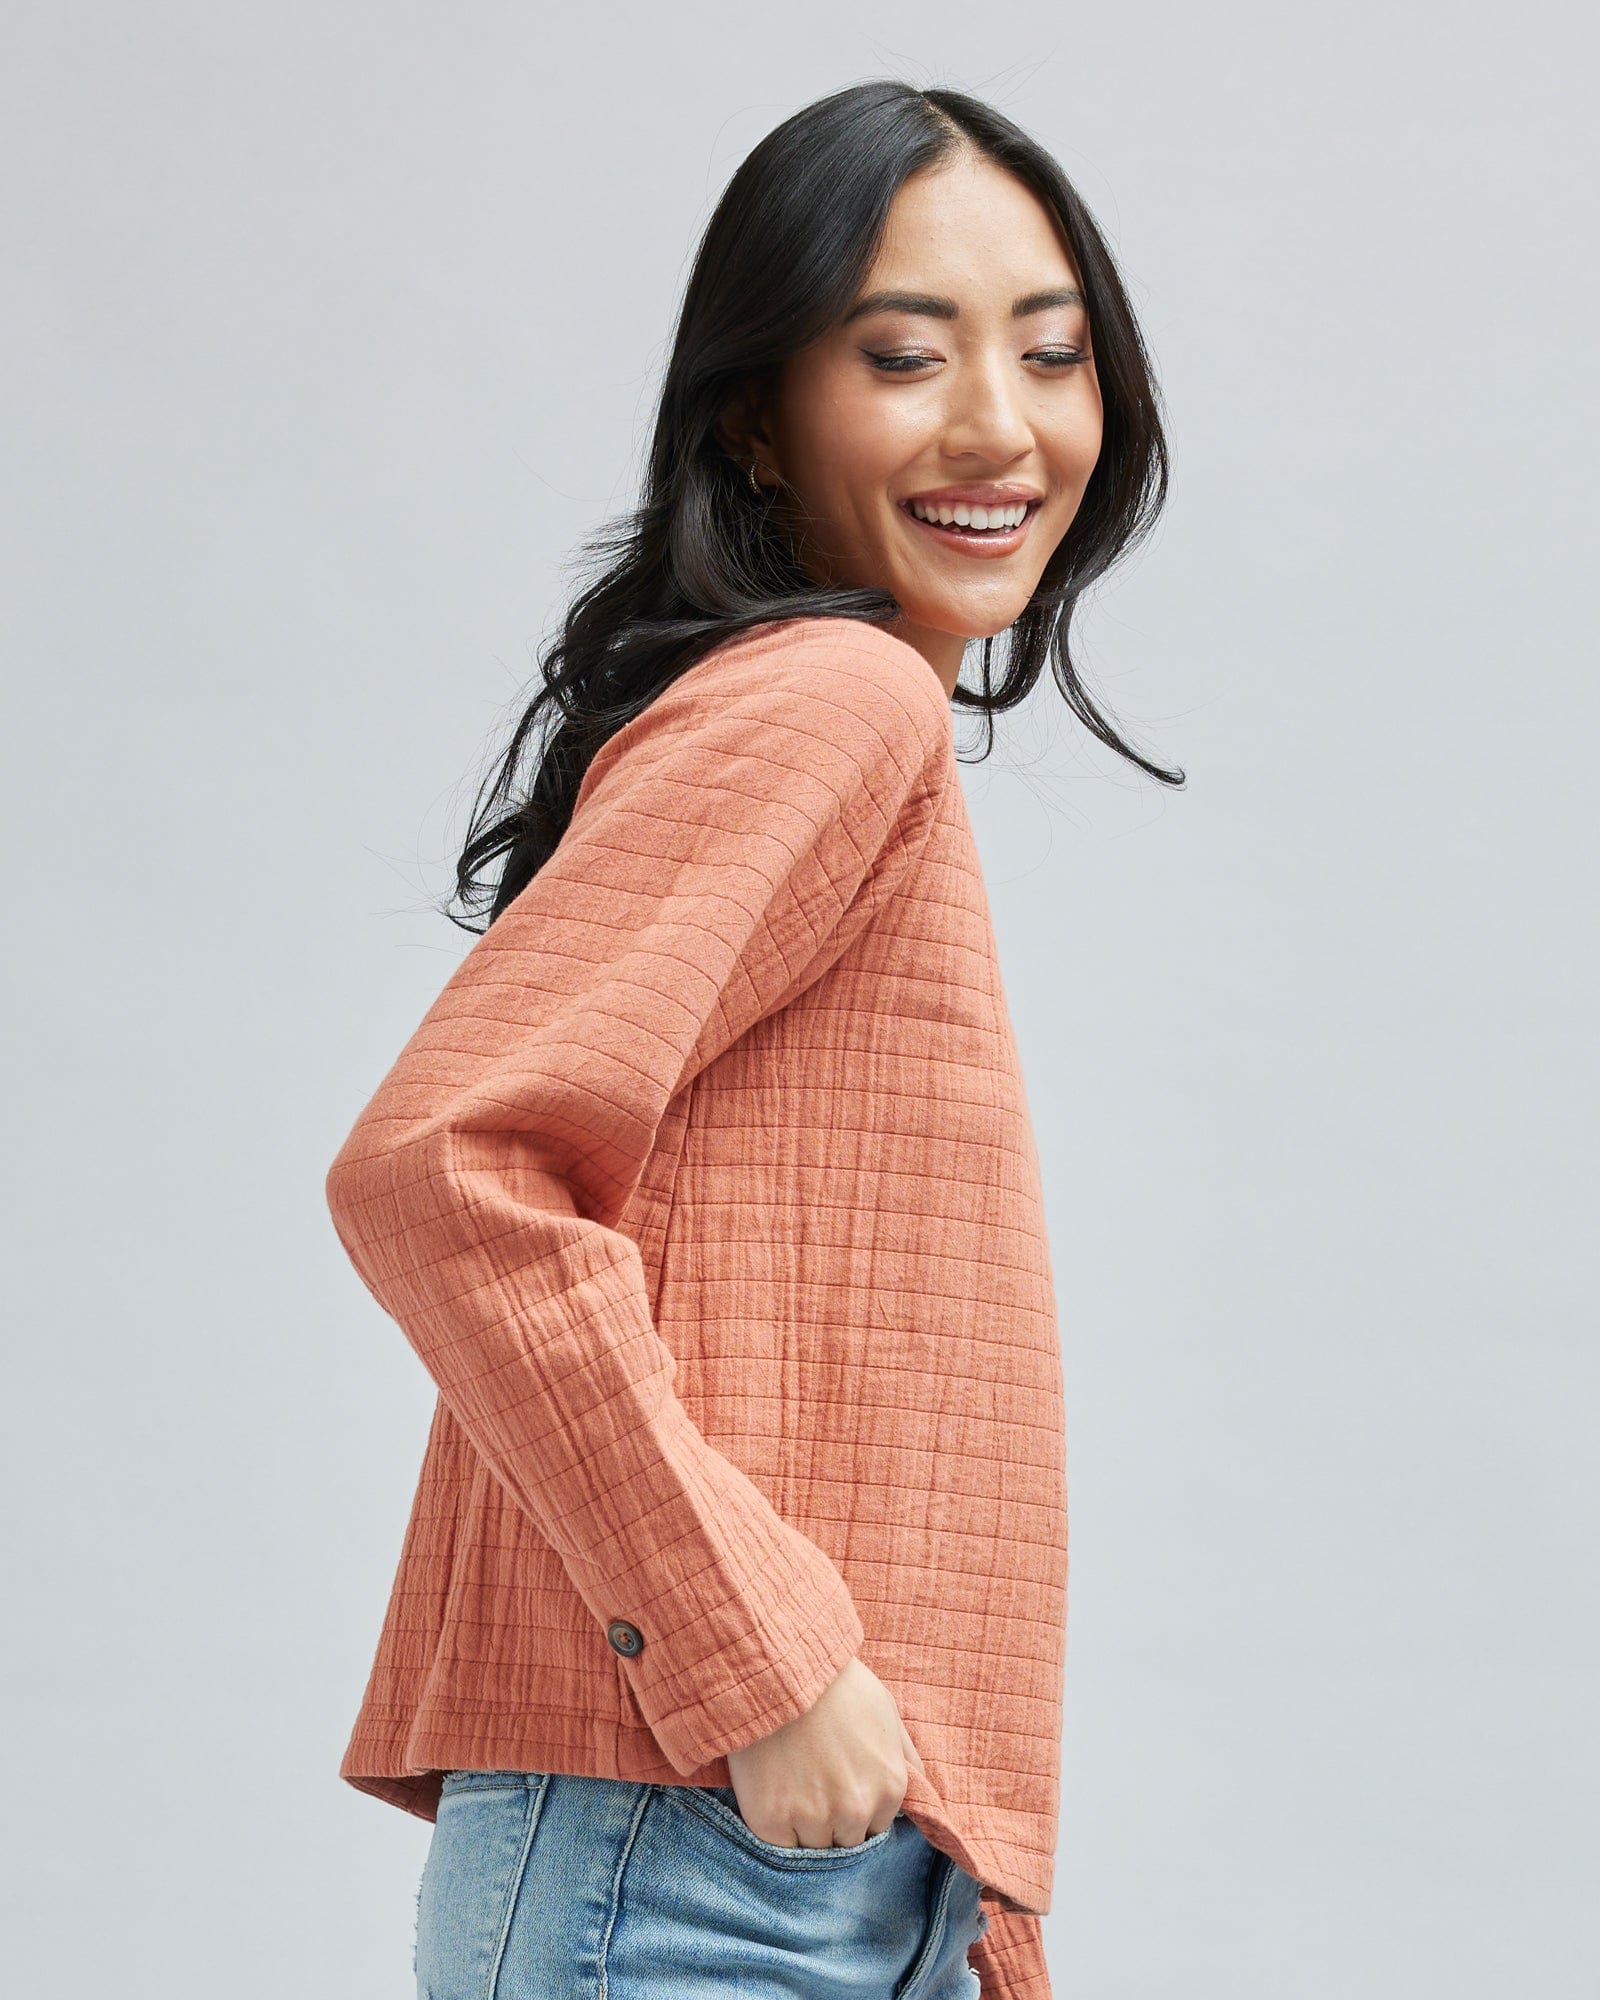 Woman in a long sleeve, orange top